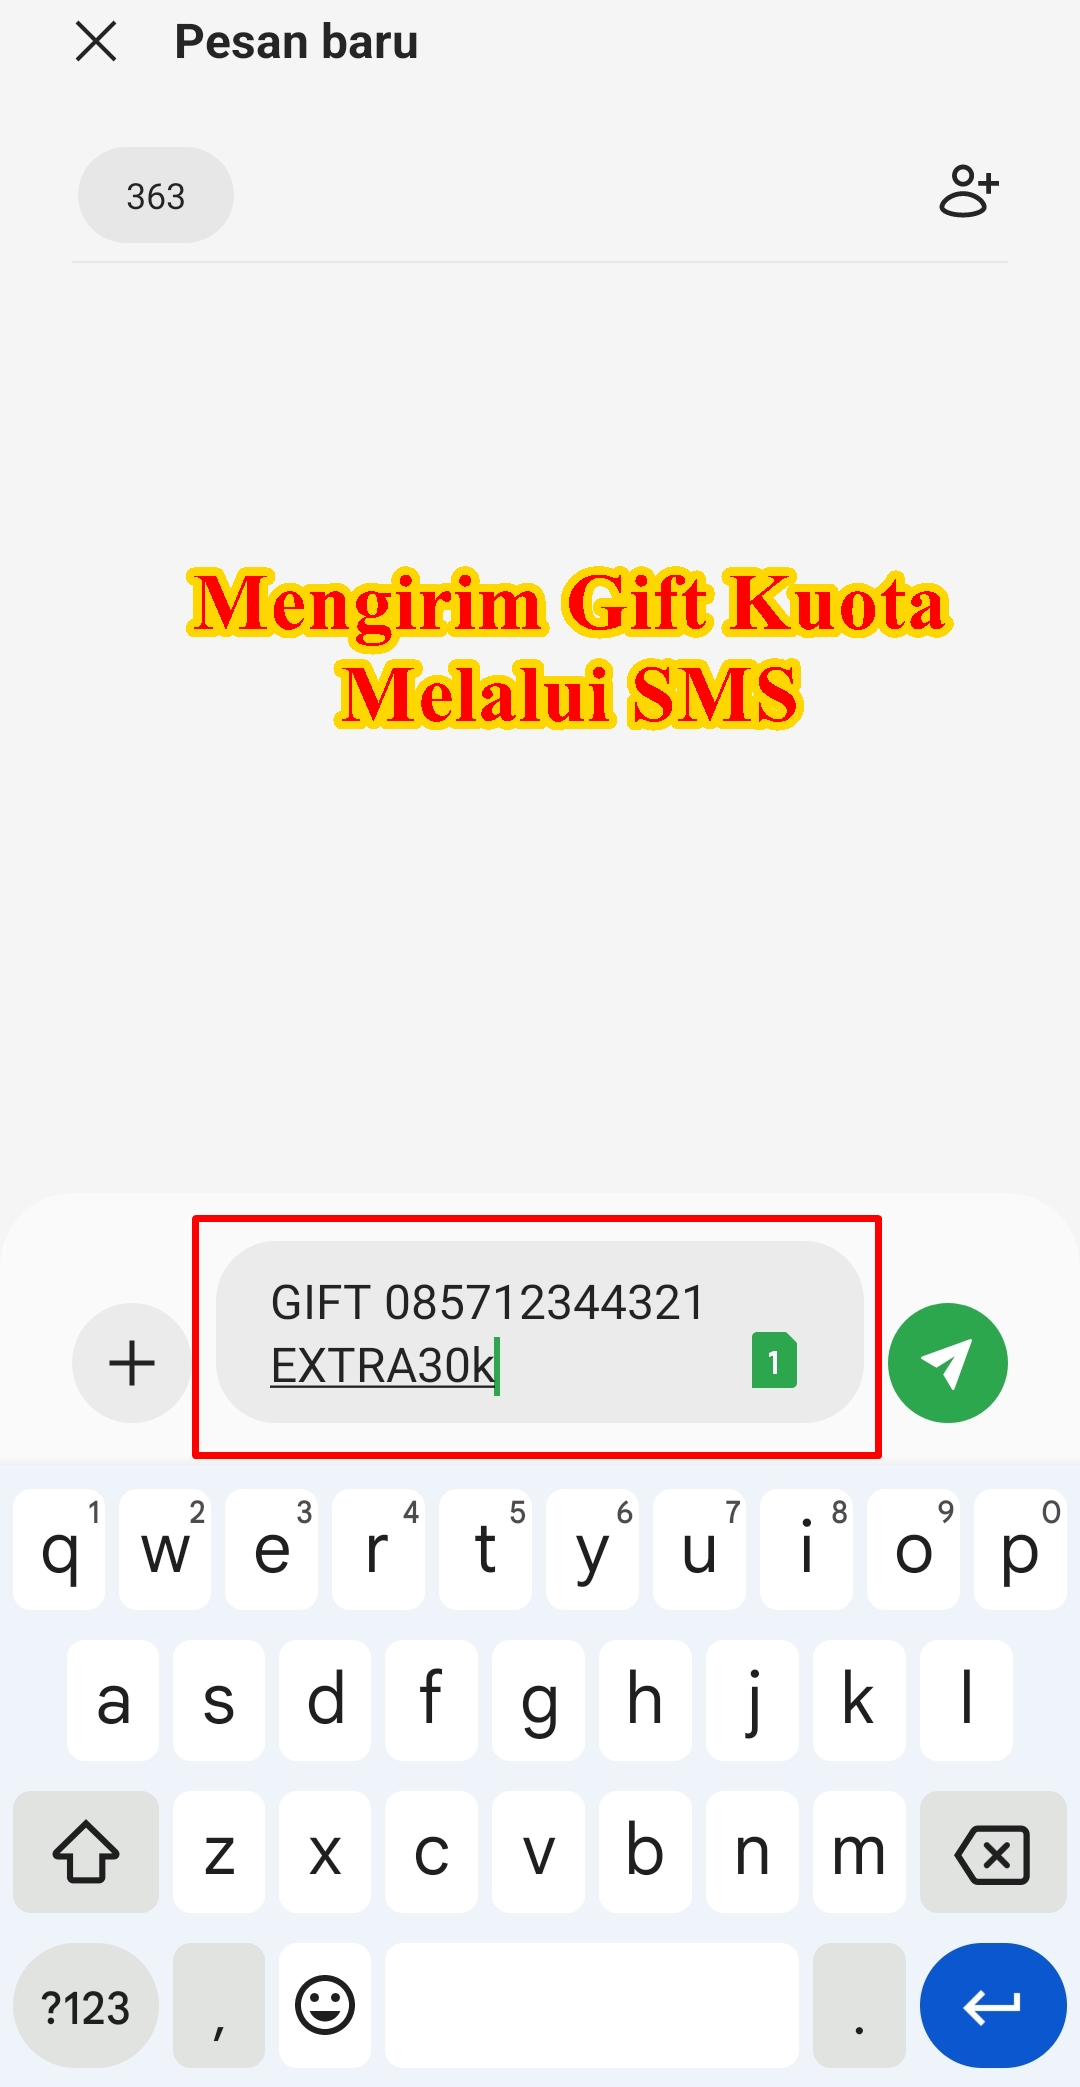 Mengirim Gift Kuota Melalui SMS